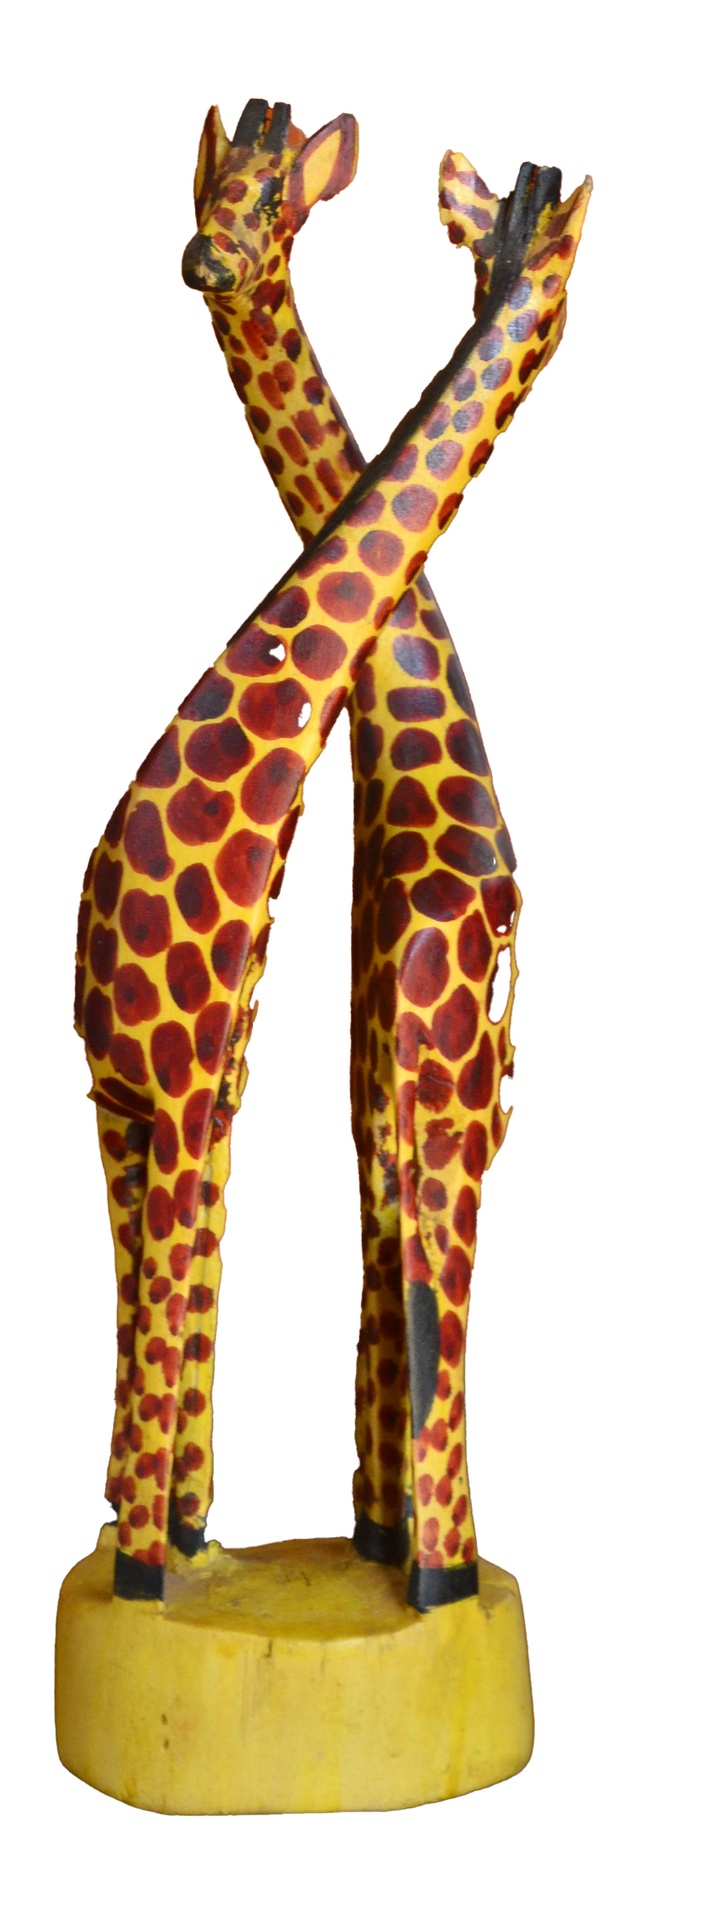 Twisted Giraffes